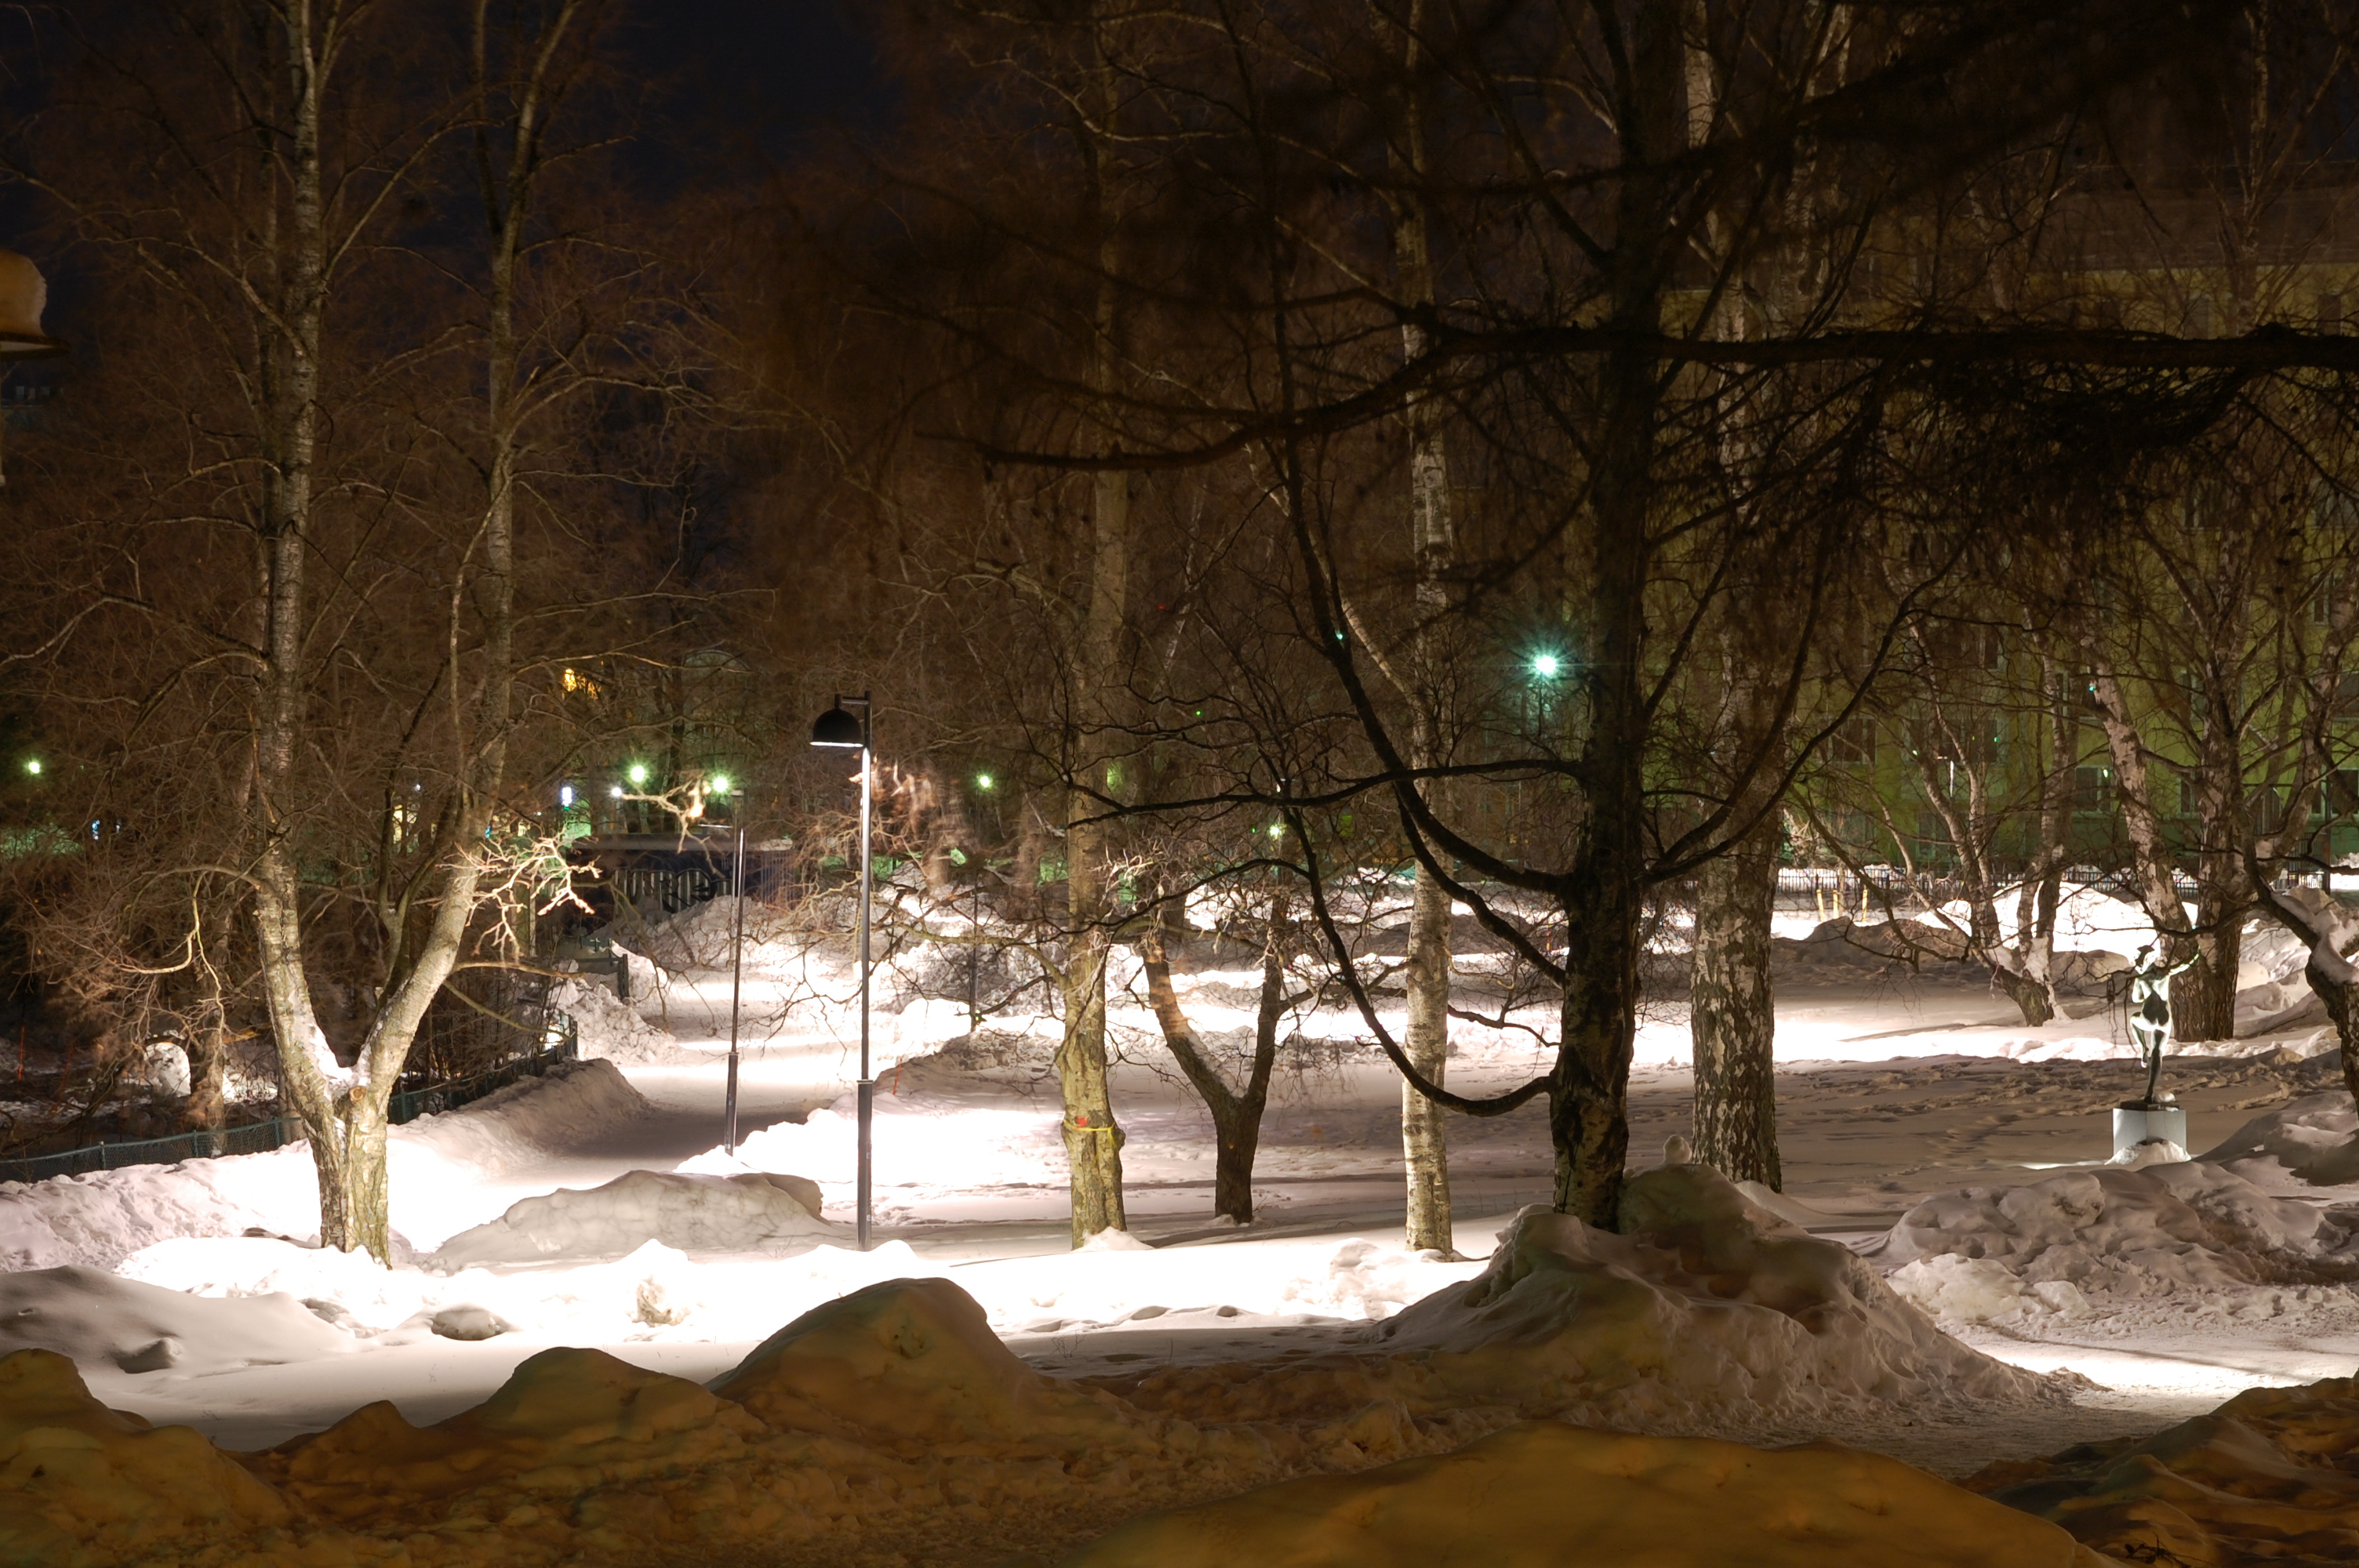 File:Park at winter night - panoramio.jpg - Wikimedia Commons